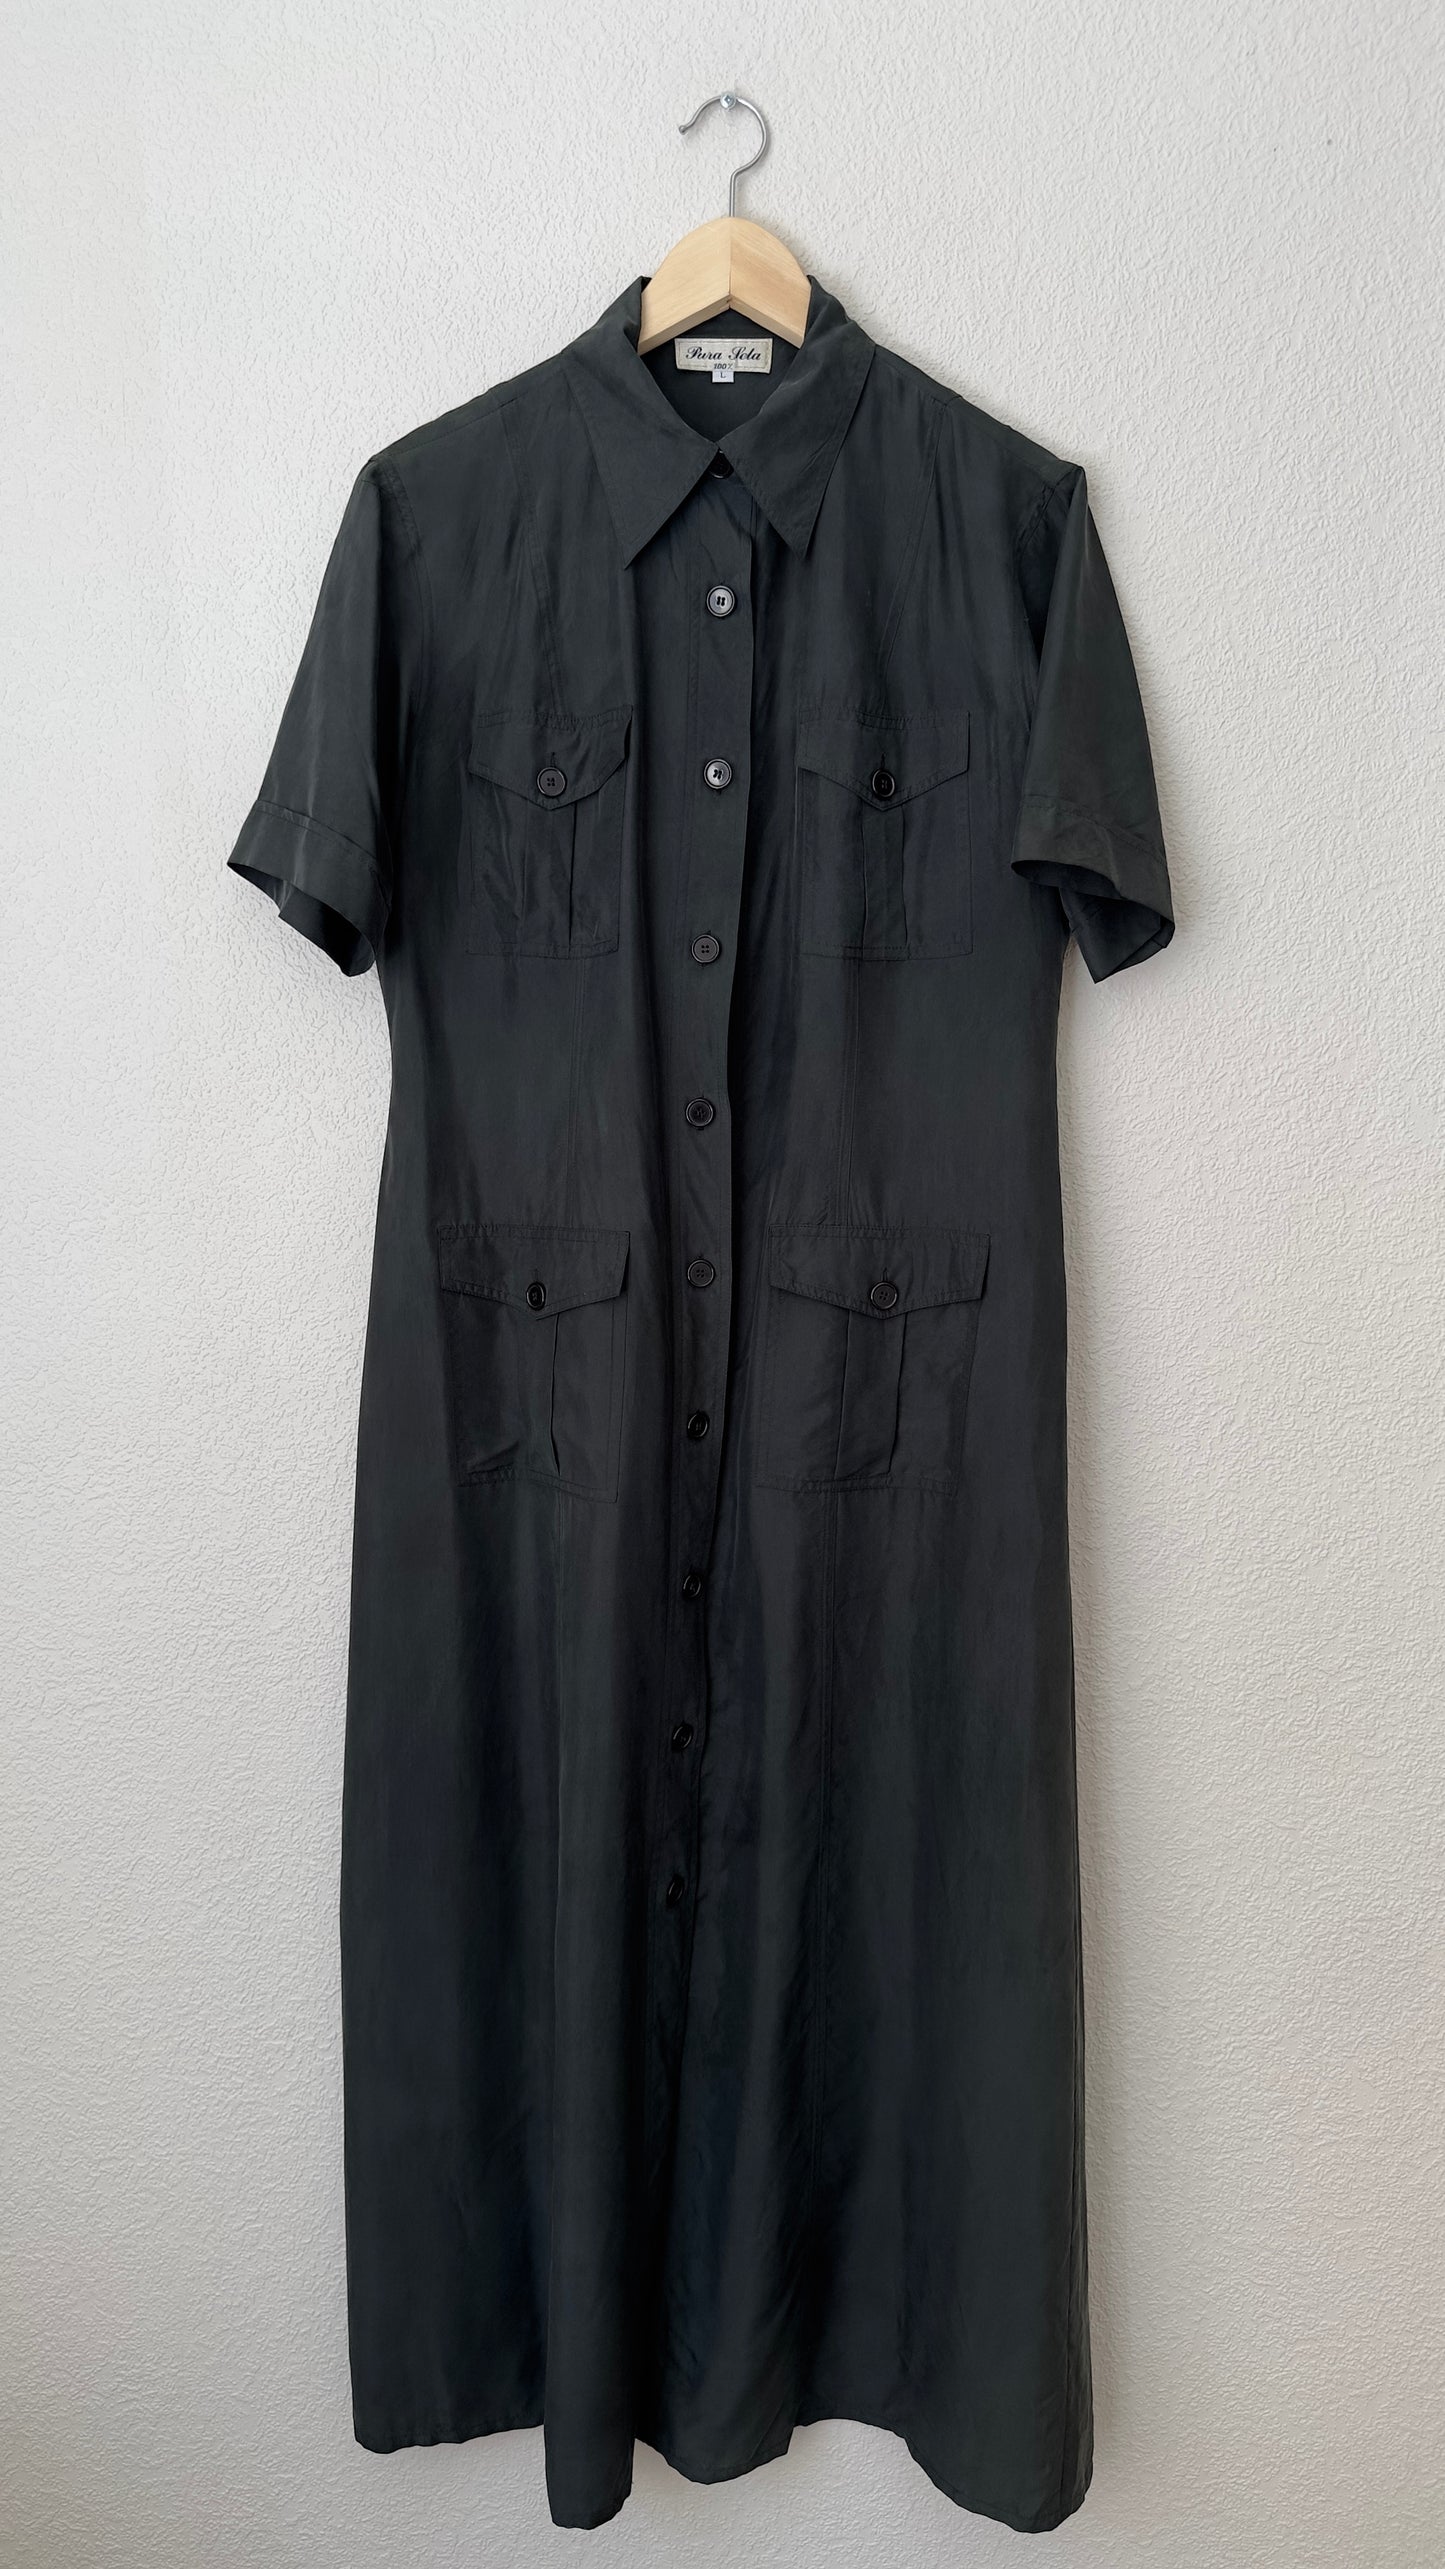 Vintage Maxi Shirt Dress - Pure Silk